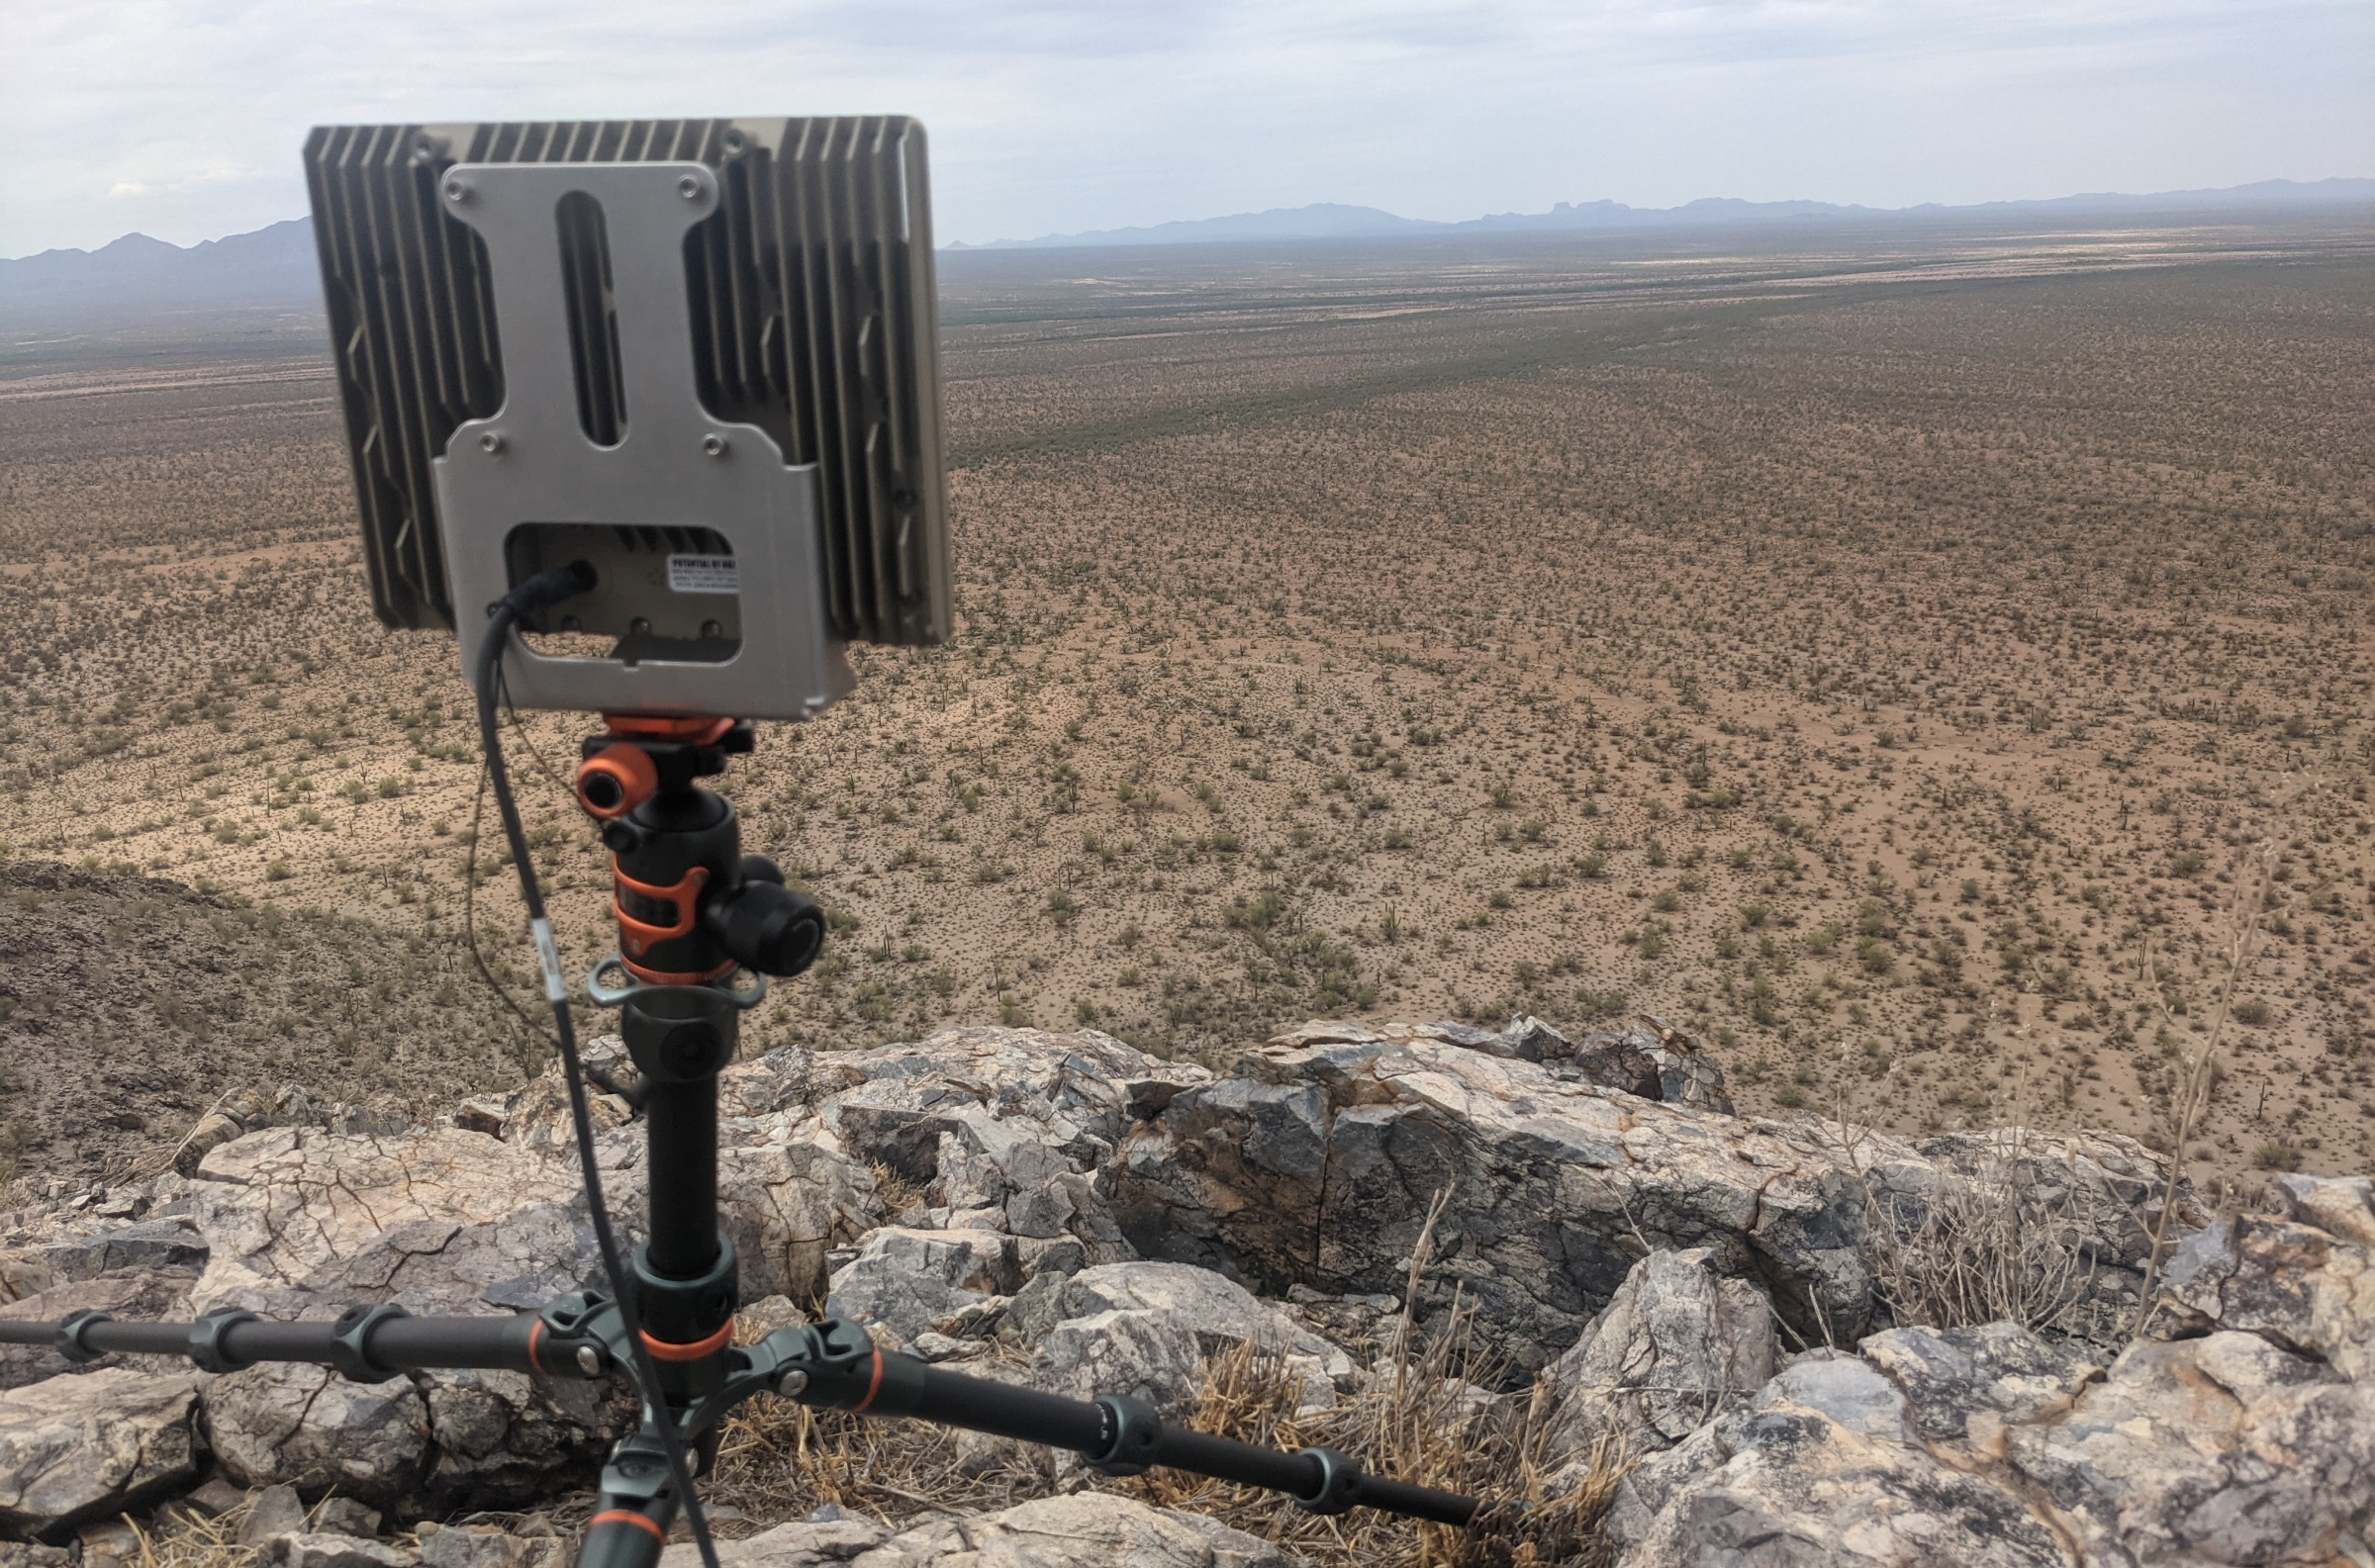 An Echodyne radar on a small tripod overseeing a desert area.